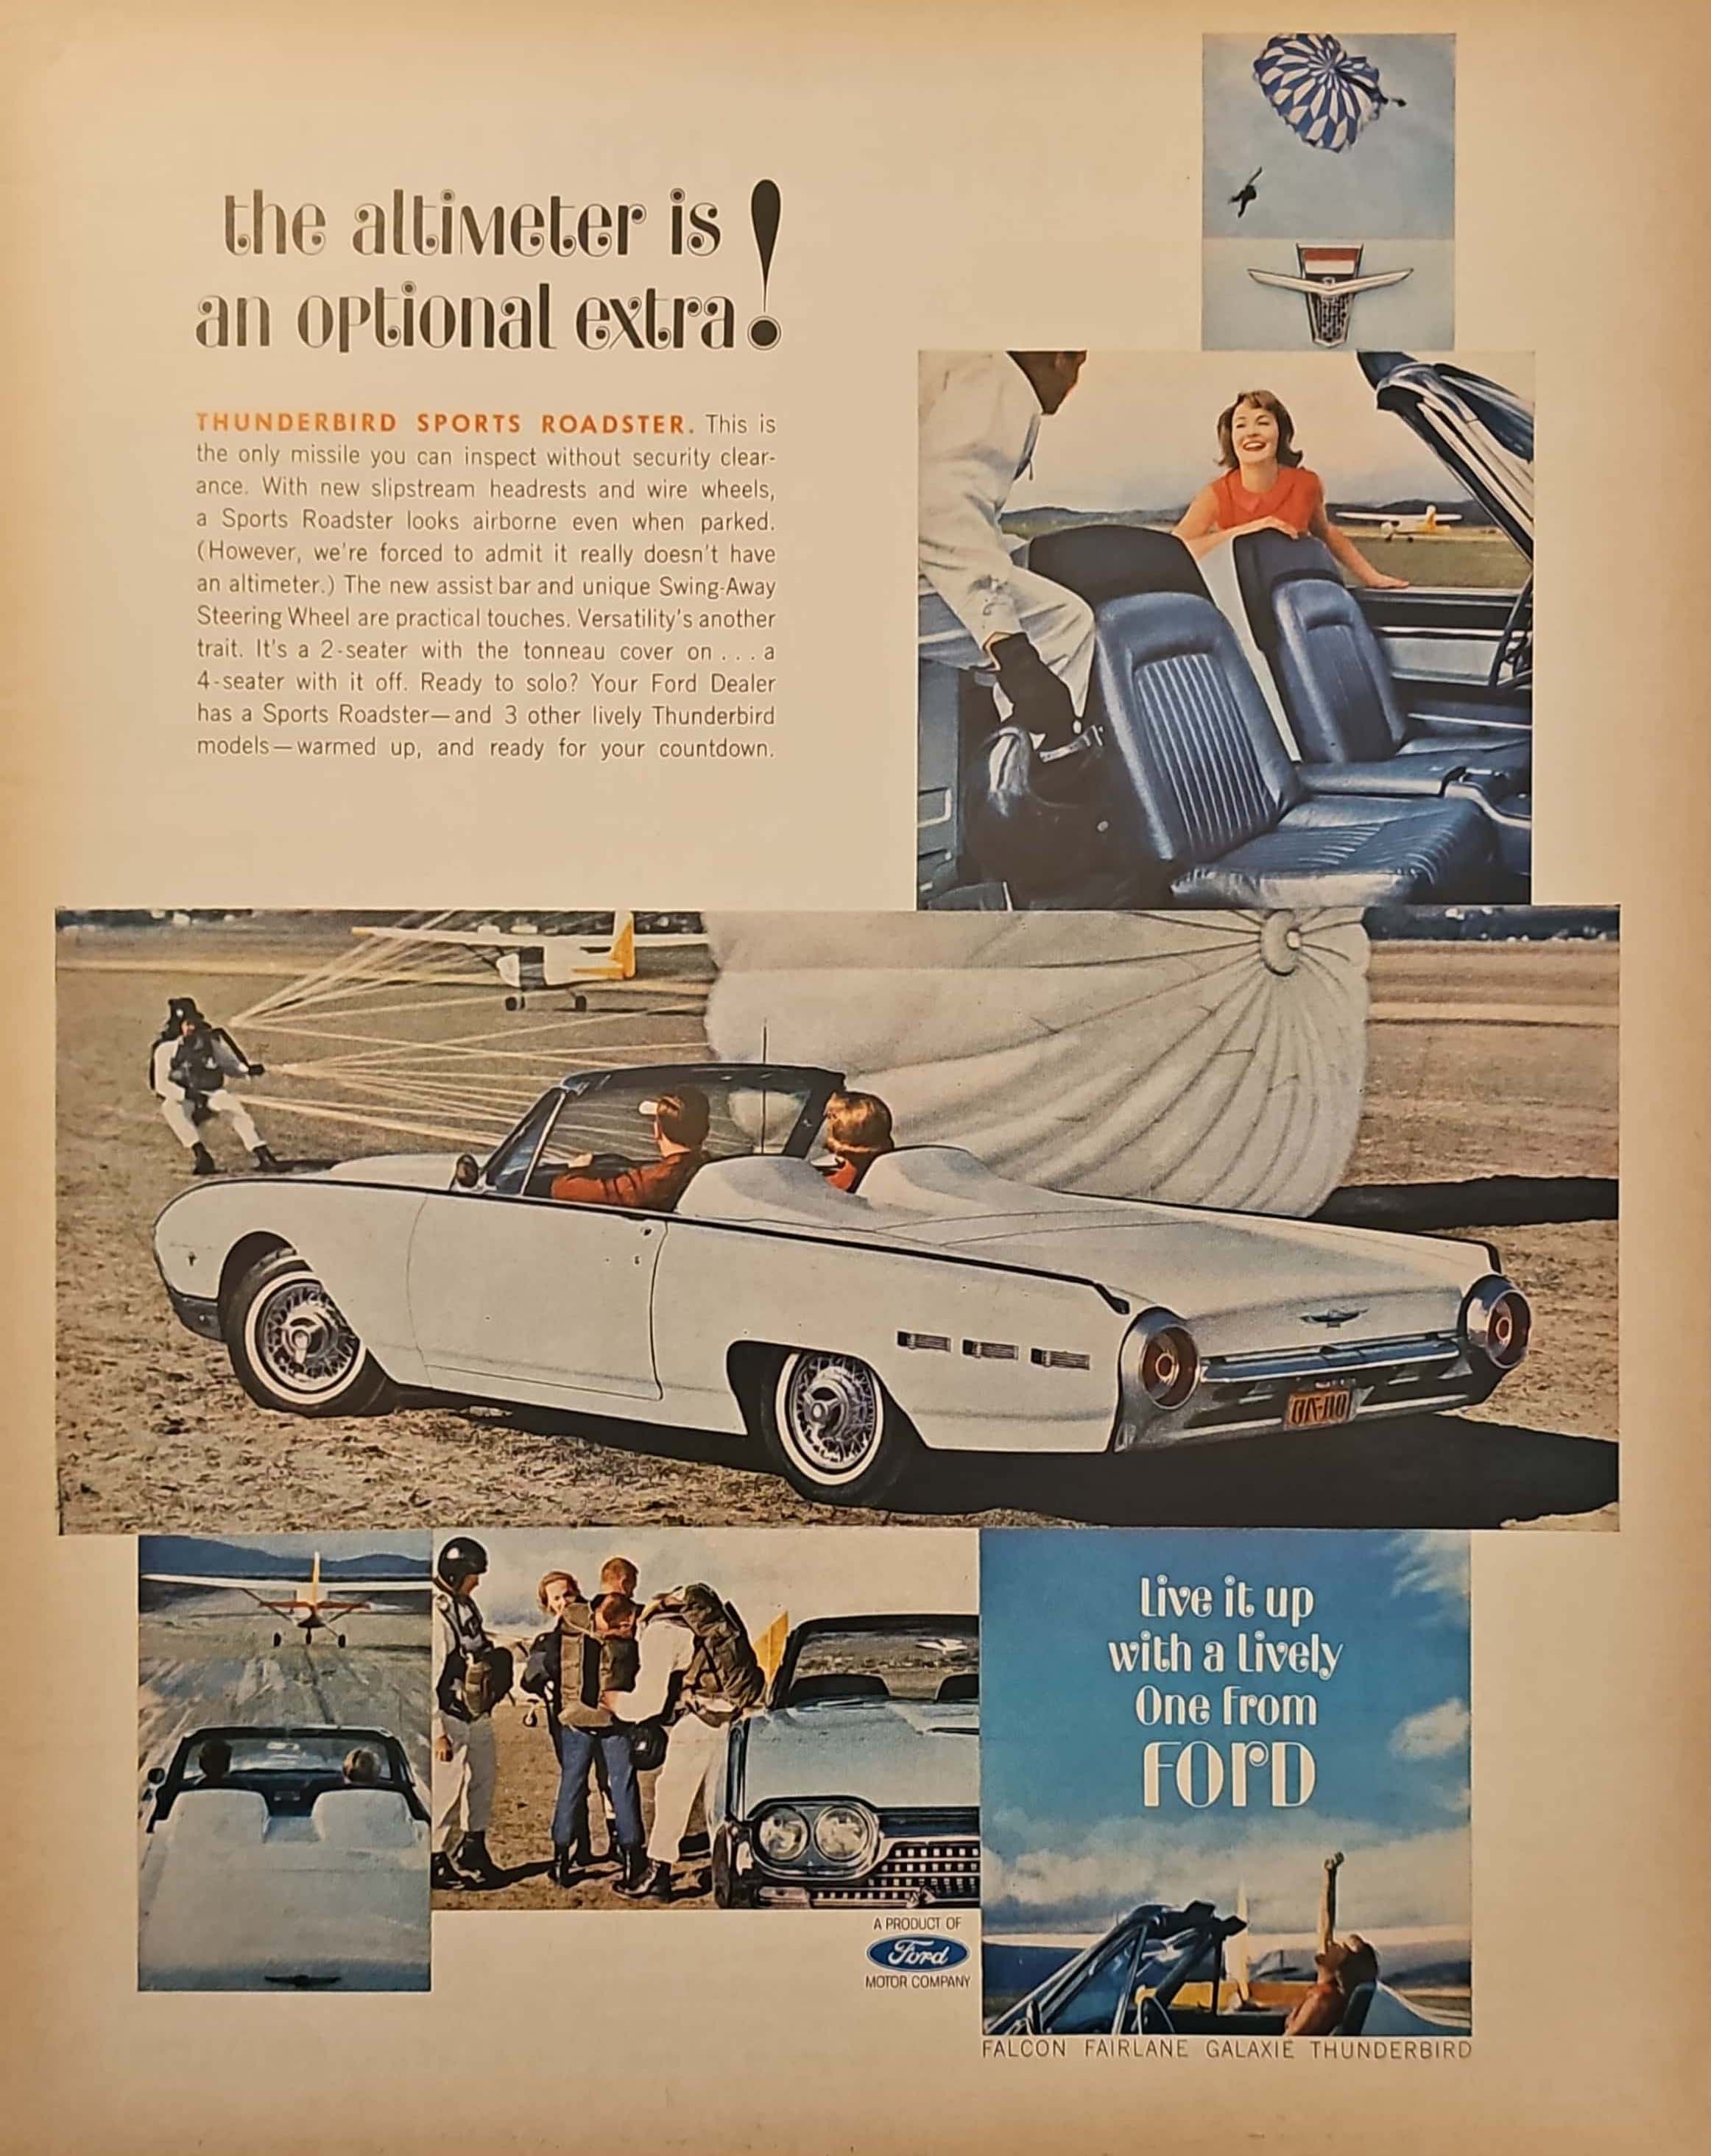 1962 Ford Thunderbird Look Magazine Advertisement July 1962 (Original)